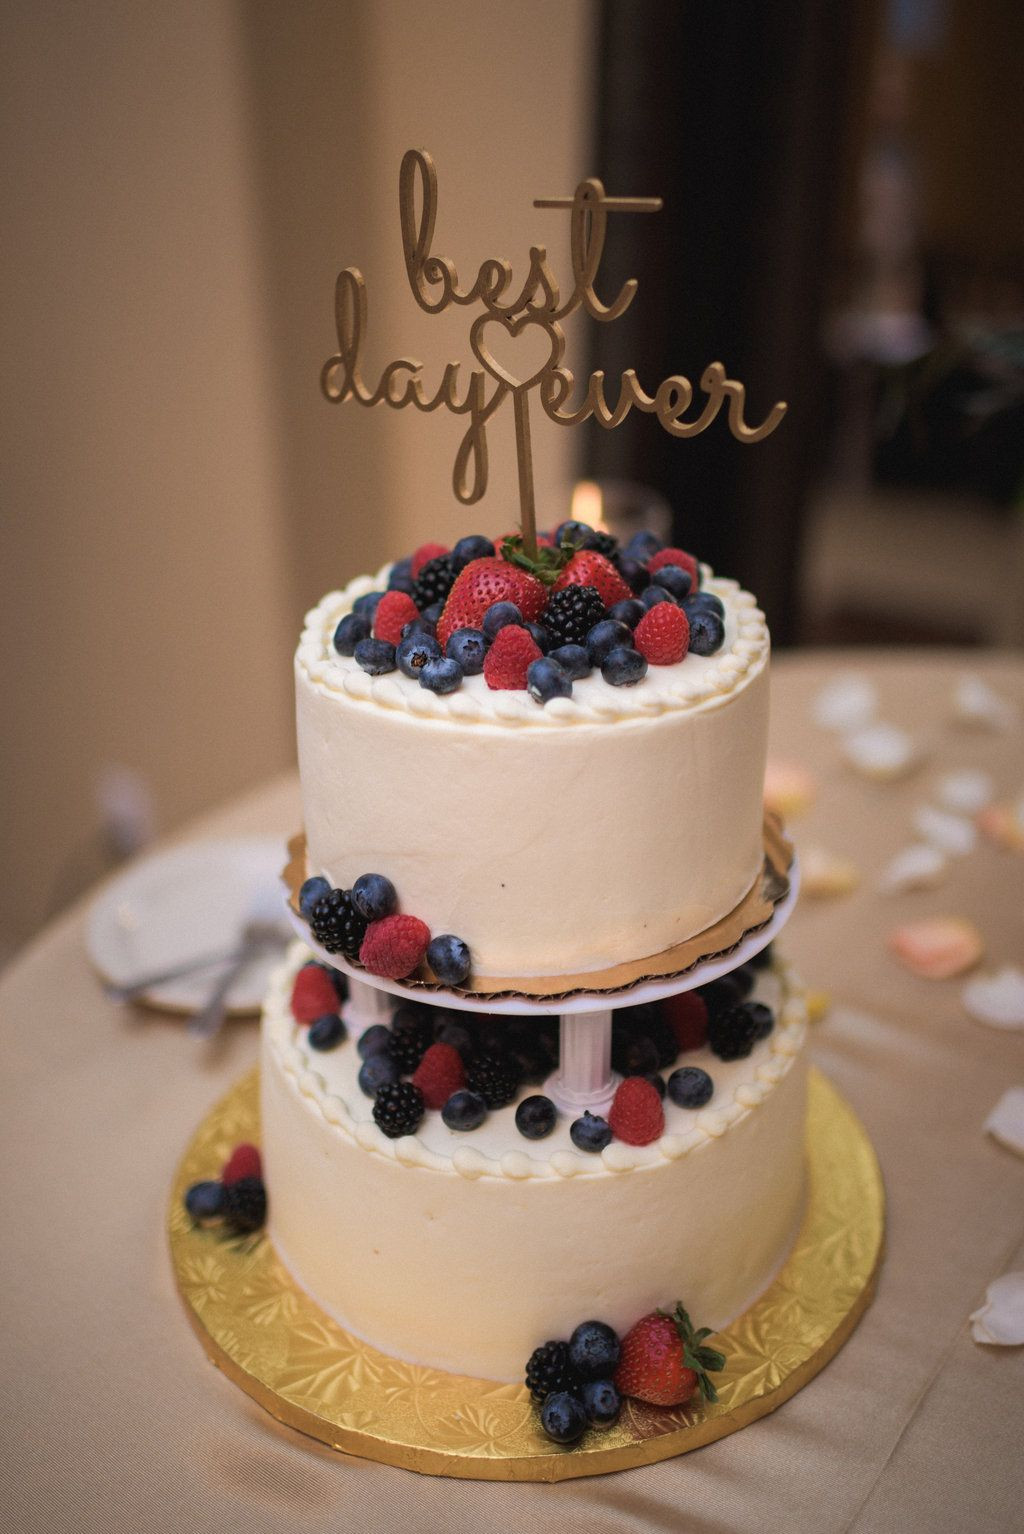 Wedding Cakes Whole Foods
 Whole foods Berry Chantilly wedding cake